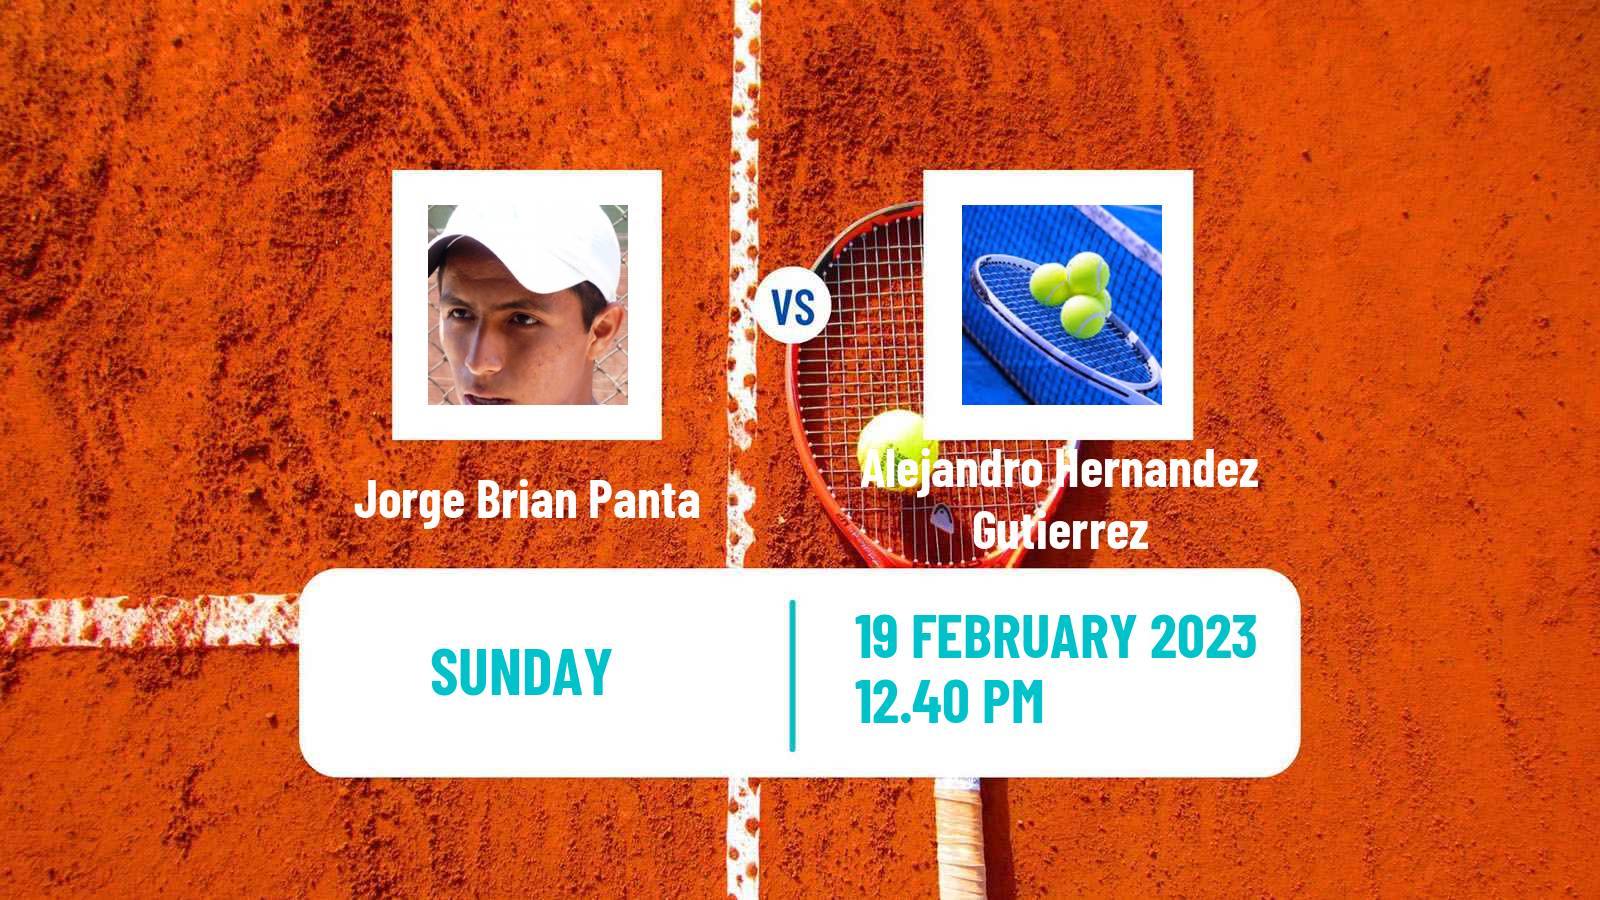 Tennis ATP Challenger Jorge Brian Panta - Alejandro Hernandez Gutierrez